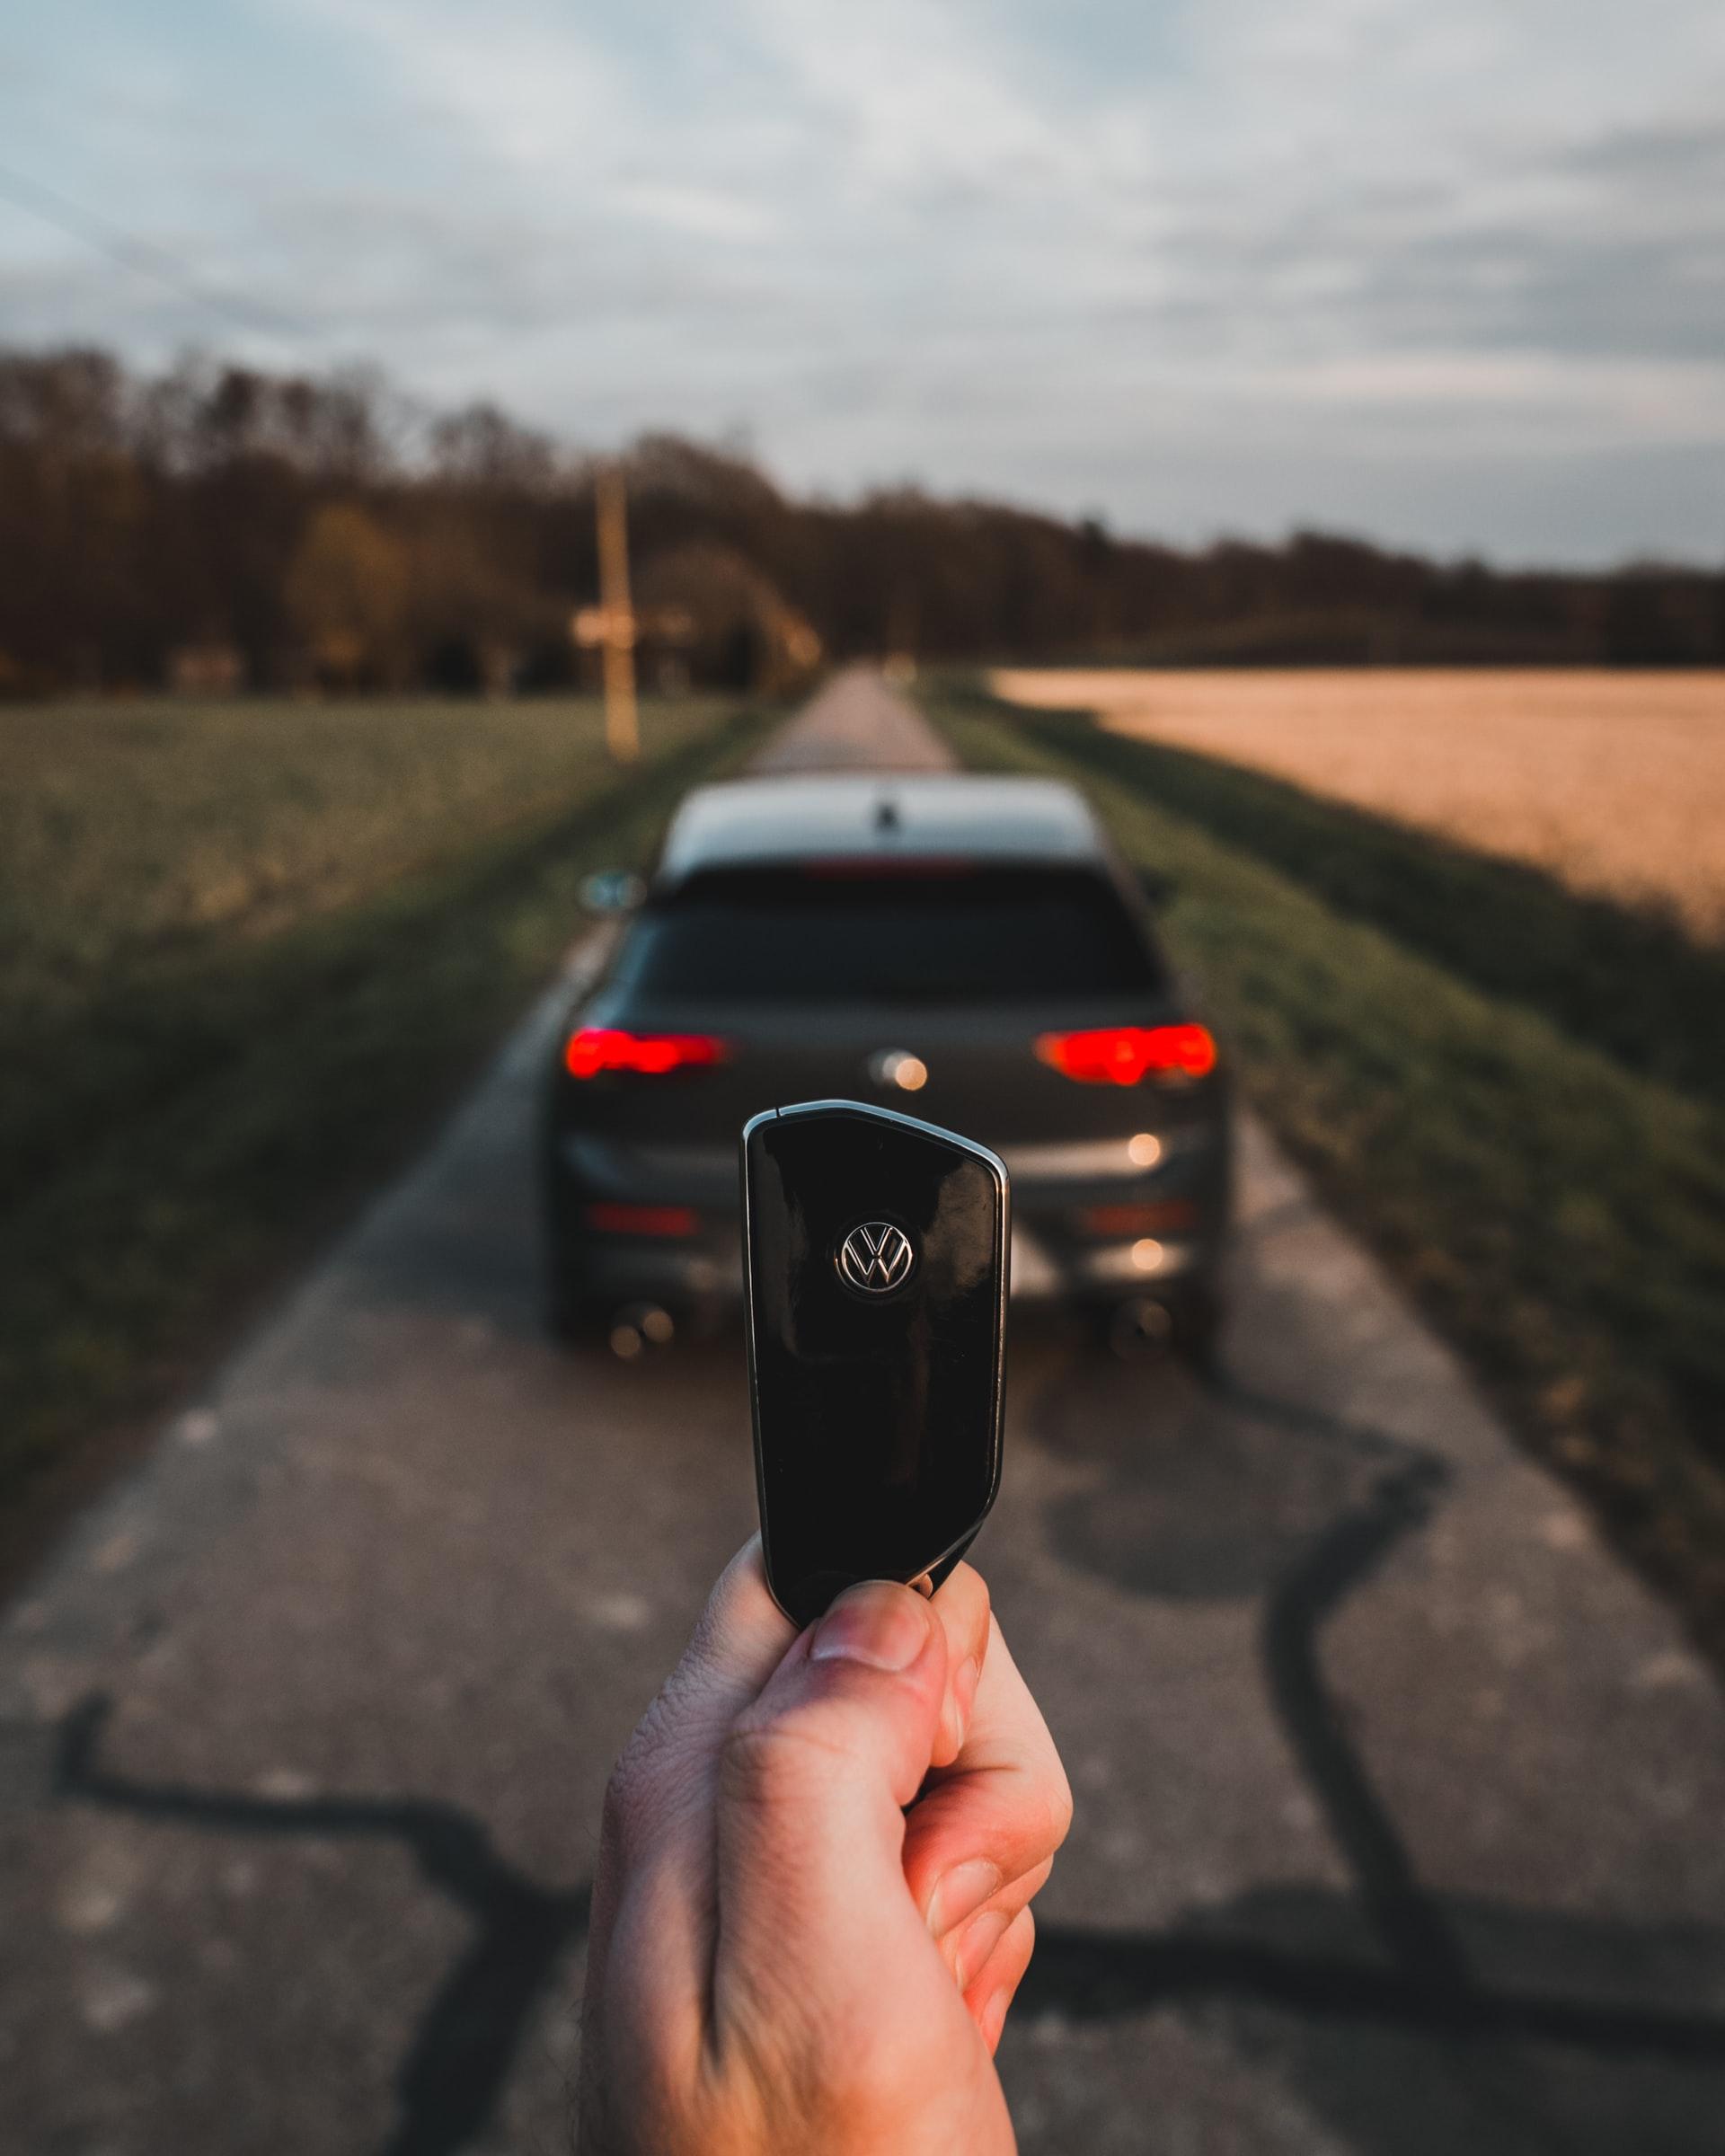 Hand holding a VW car key in front of a black VW sedan